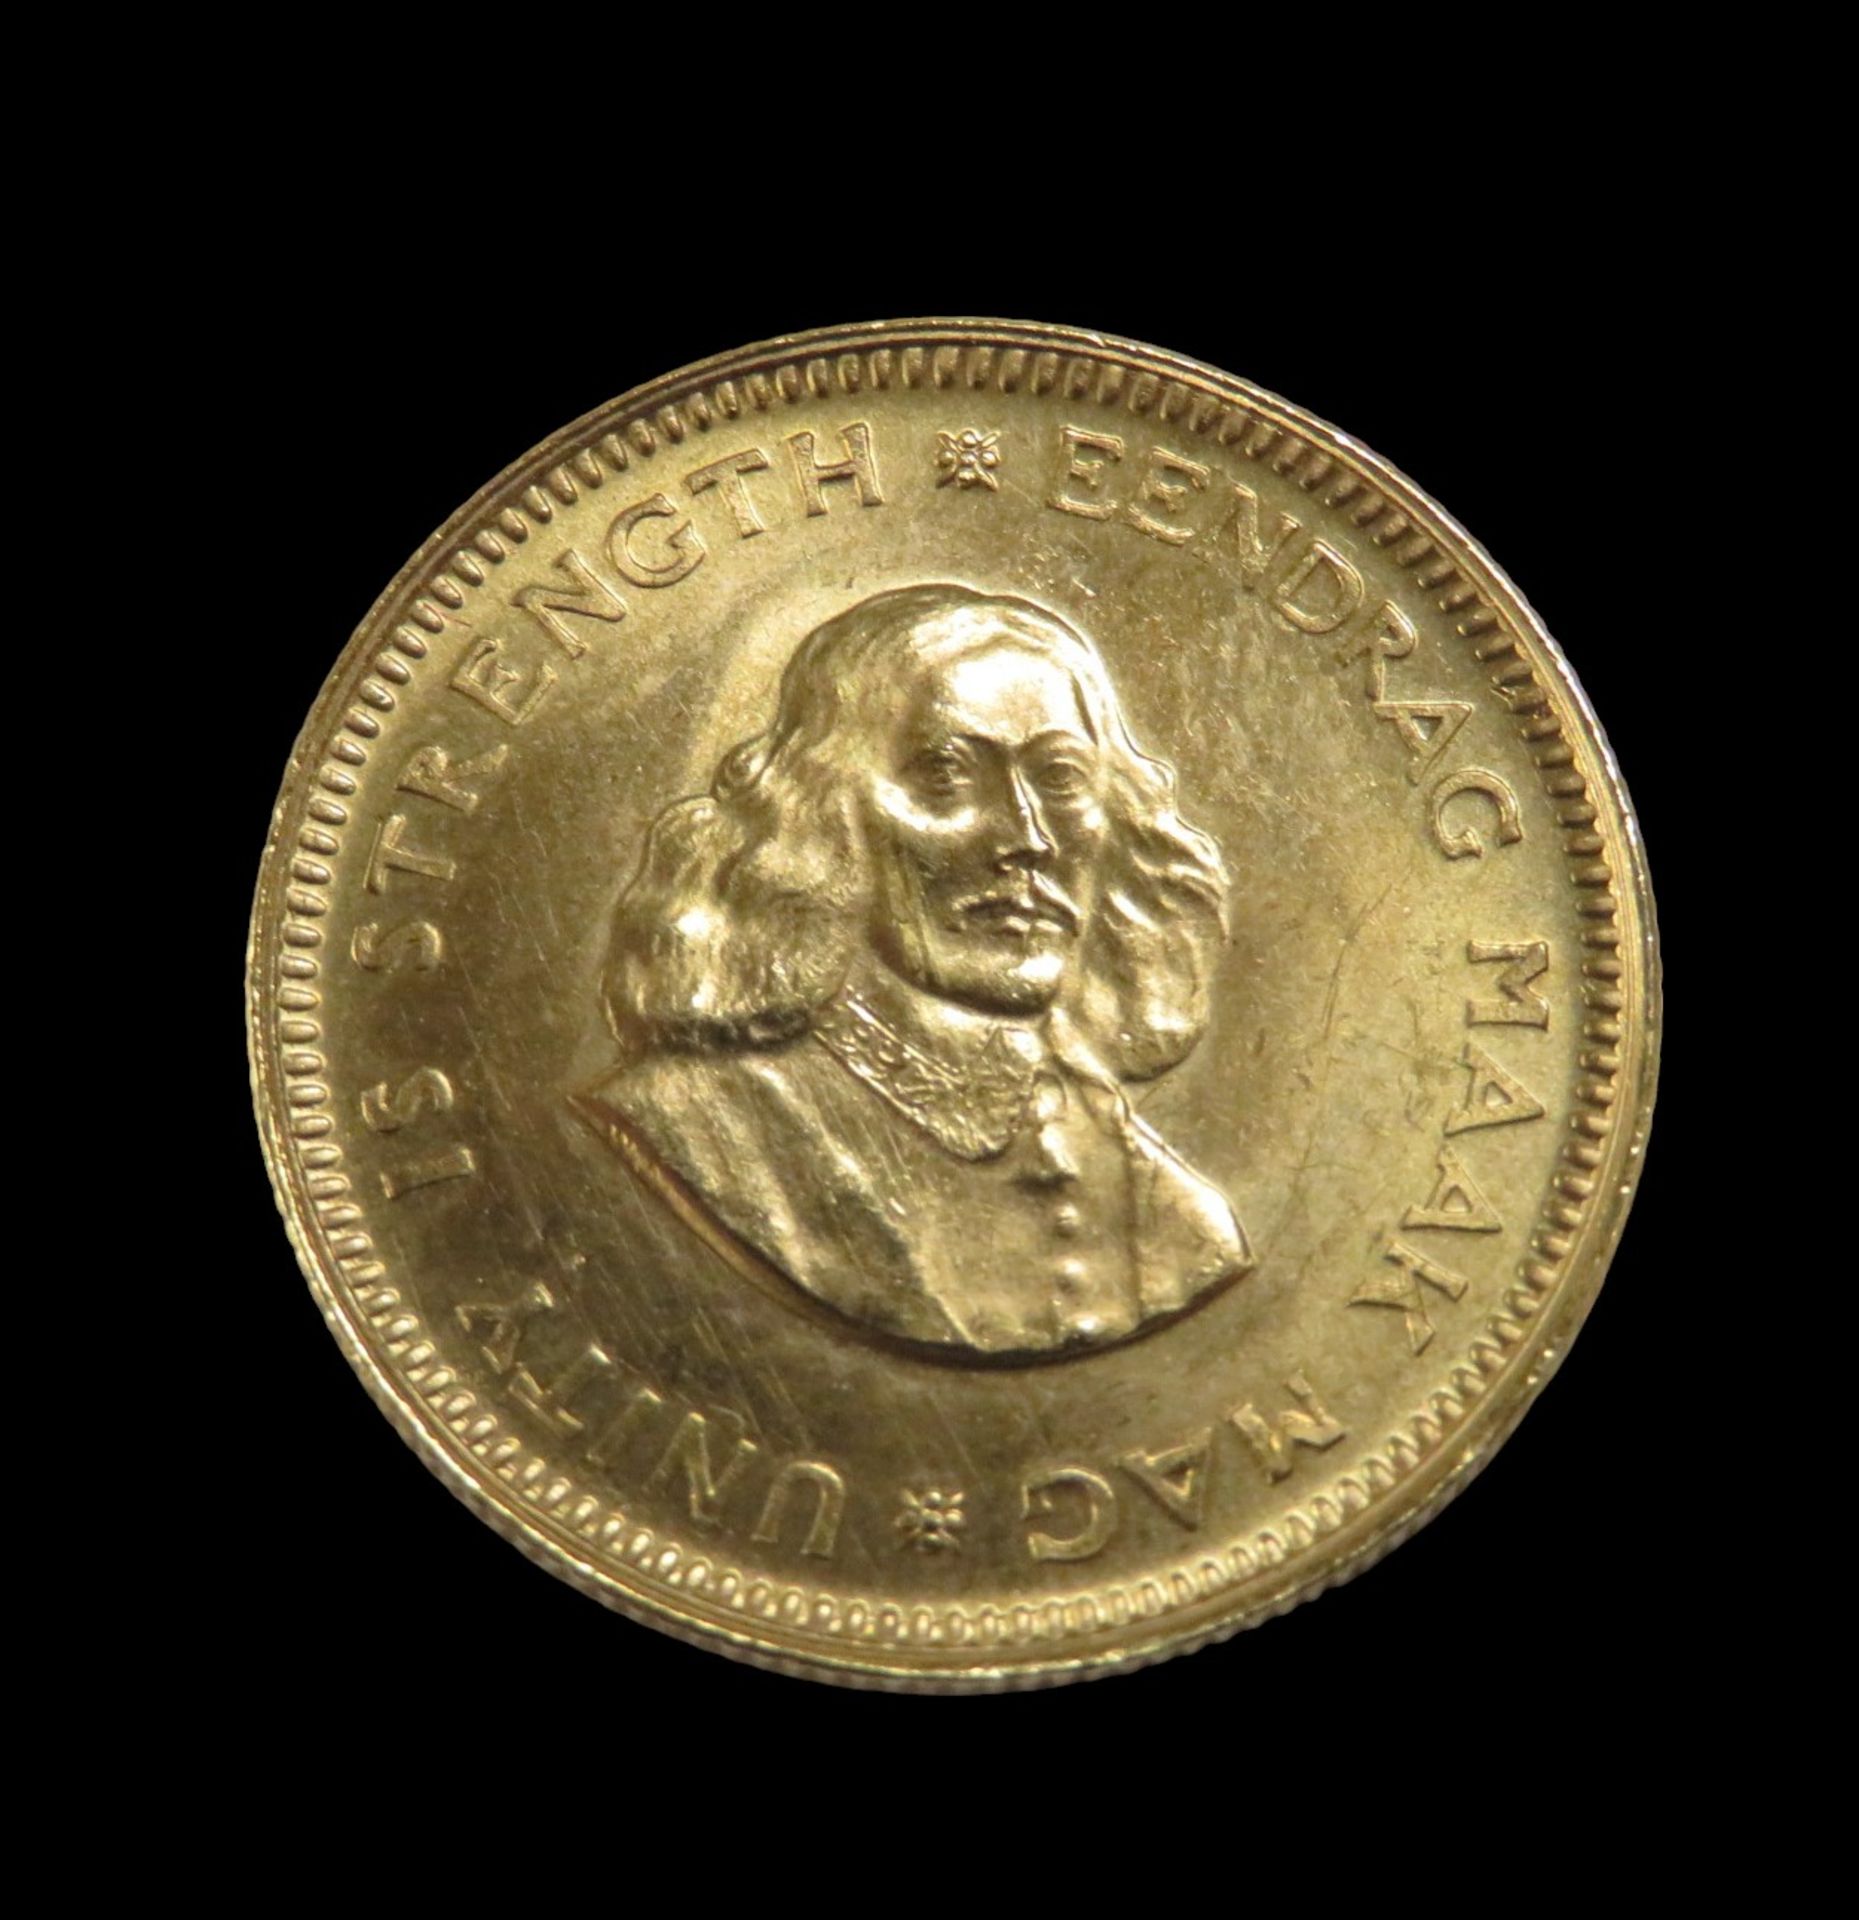 Goldmünze, 1 Rand, Südafrika, 1969, 916,6/000, 4 g, d 1,9 cm.